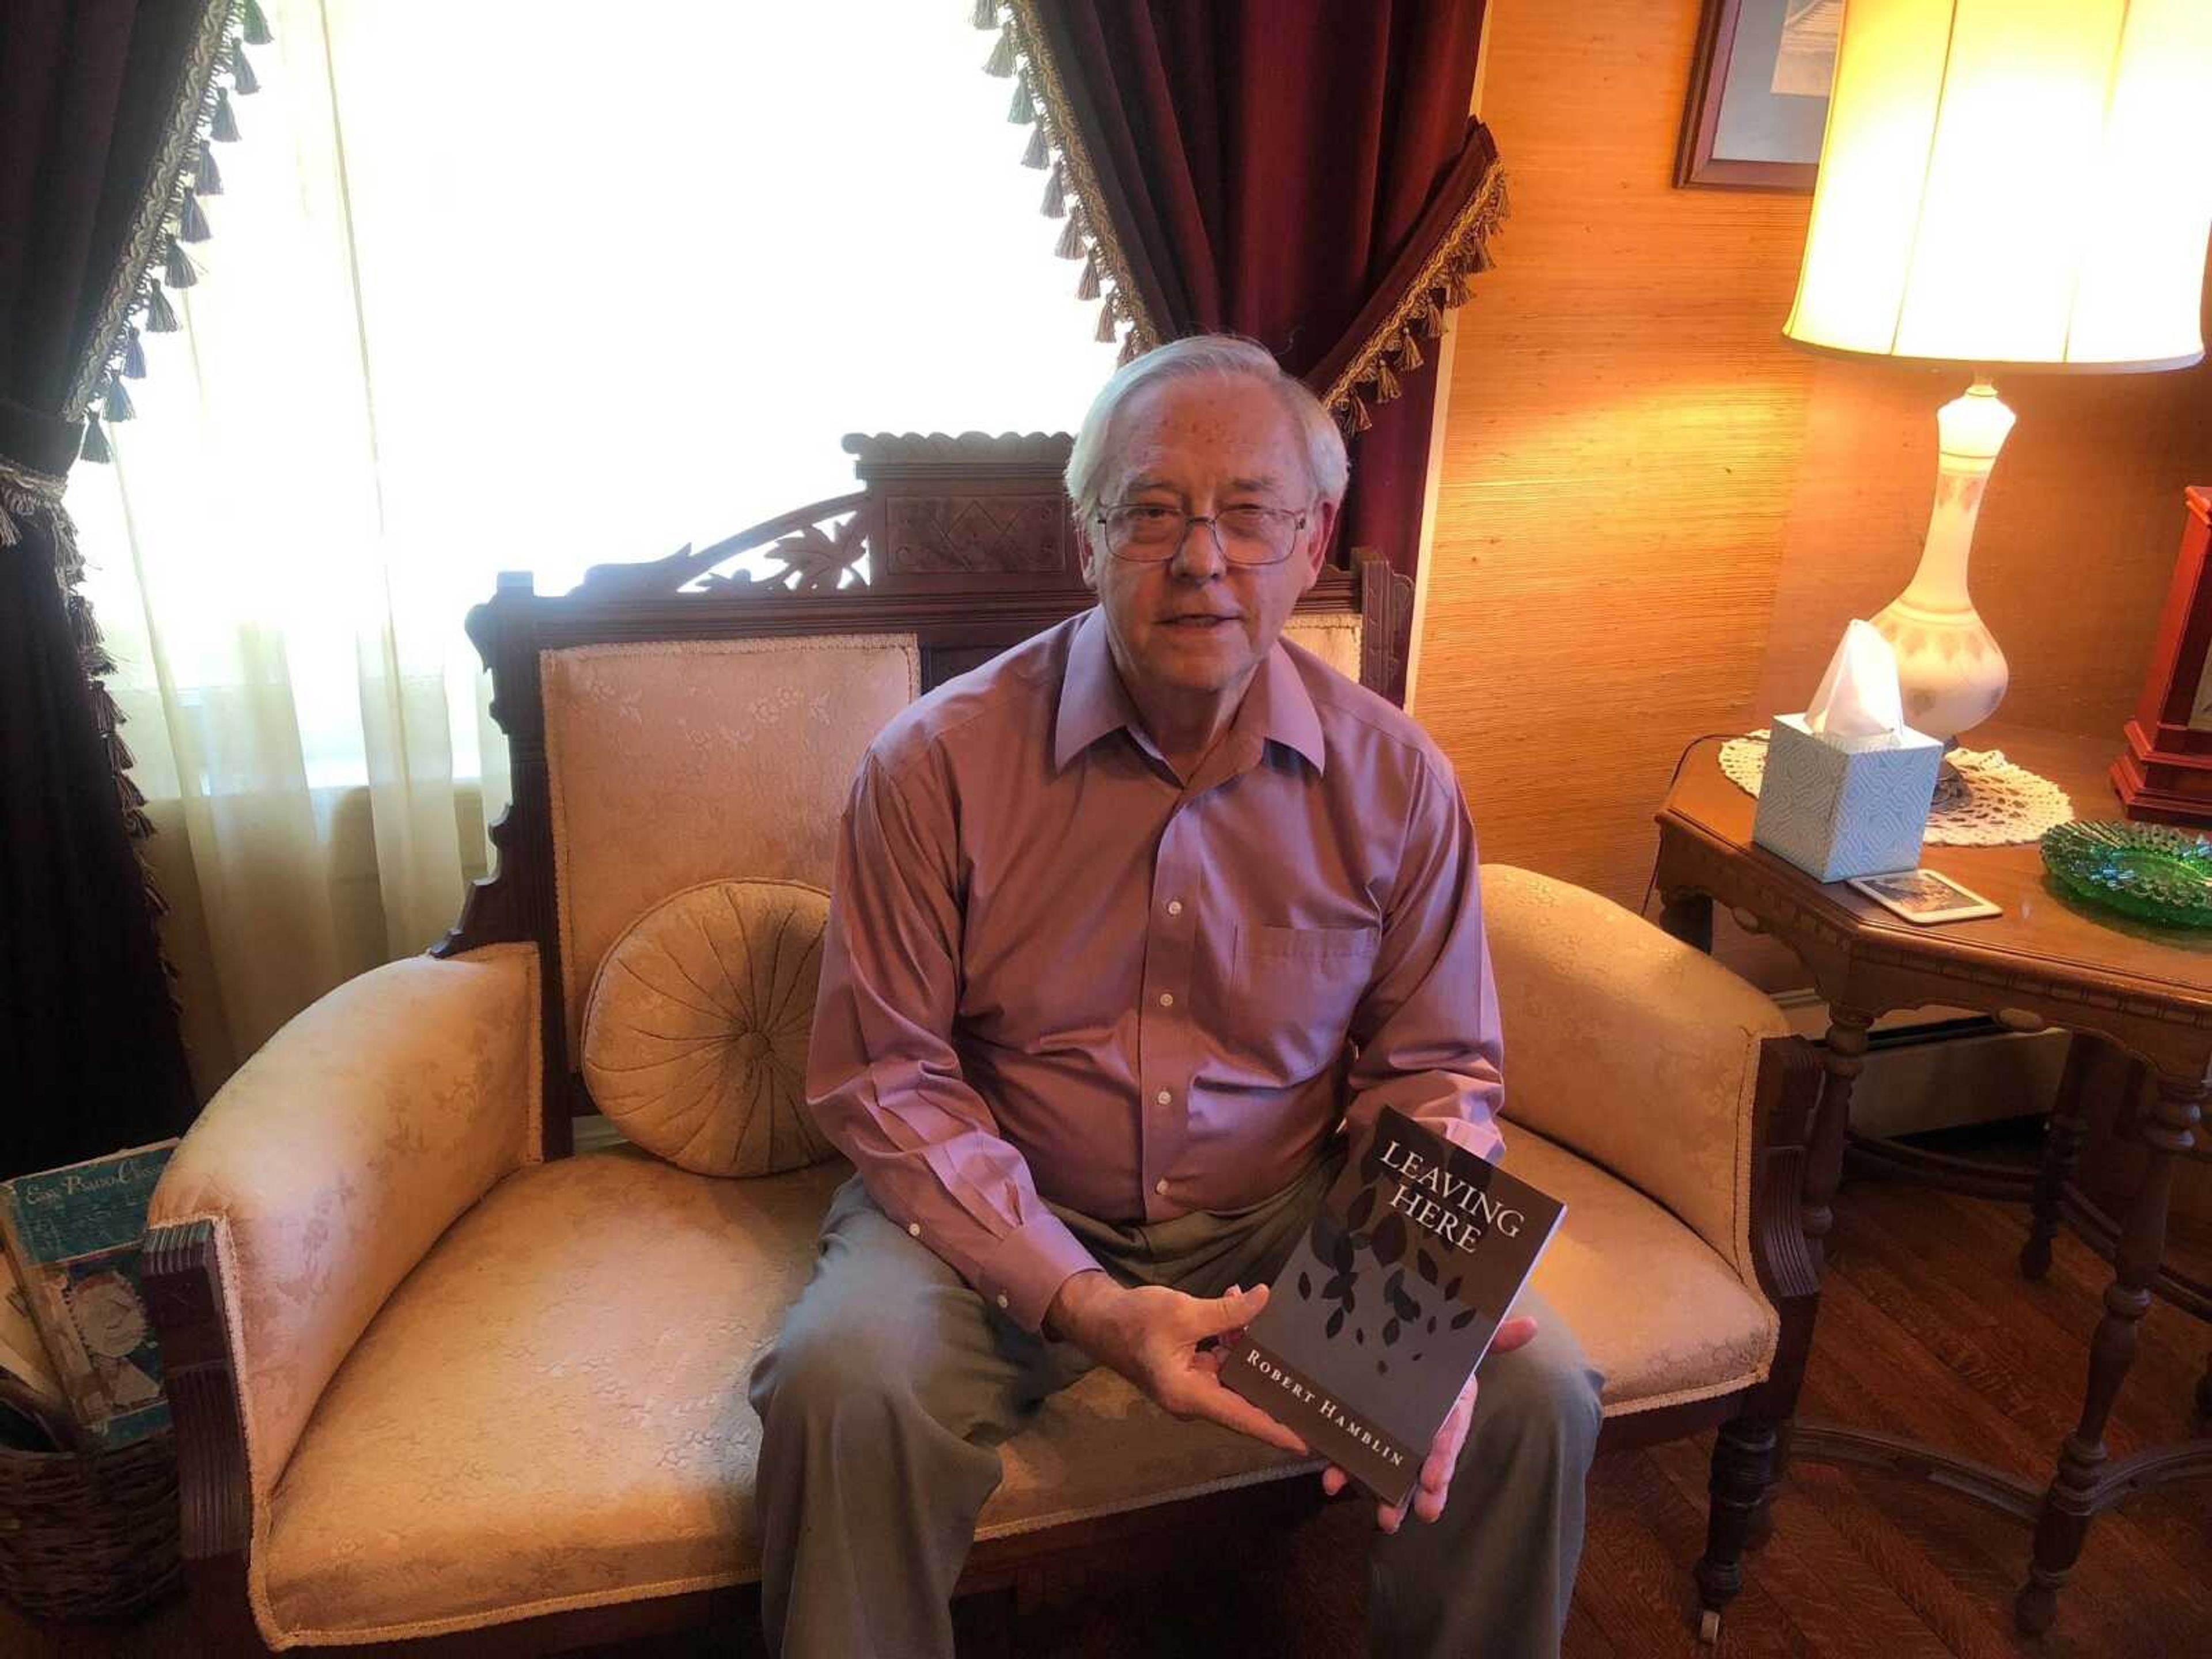 Southeast emeritus professor published gay rights novel